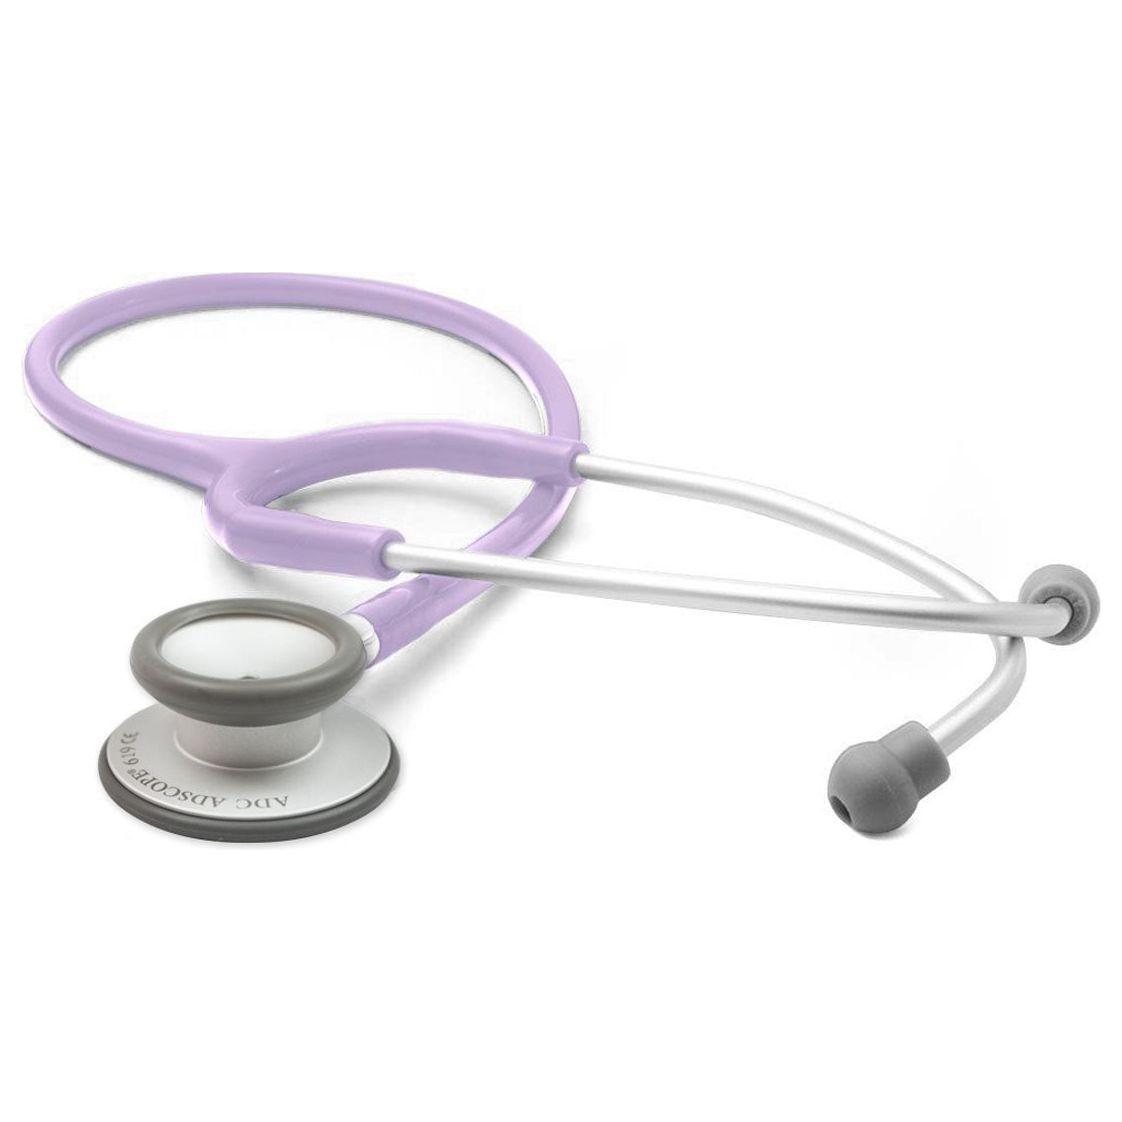 ADSCOPE-Ultra Lite Clinician Stethoscope